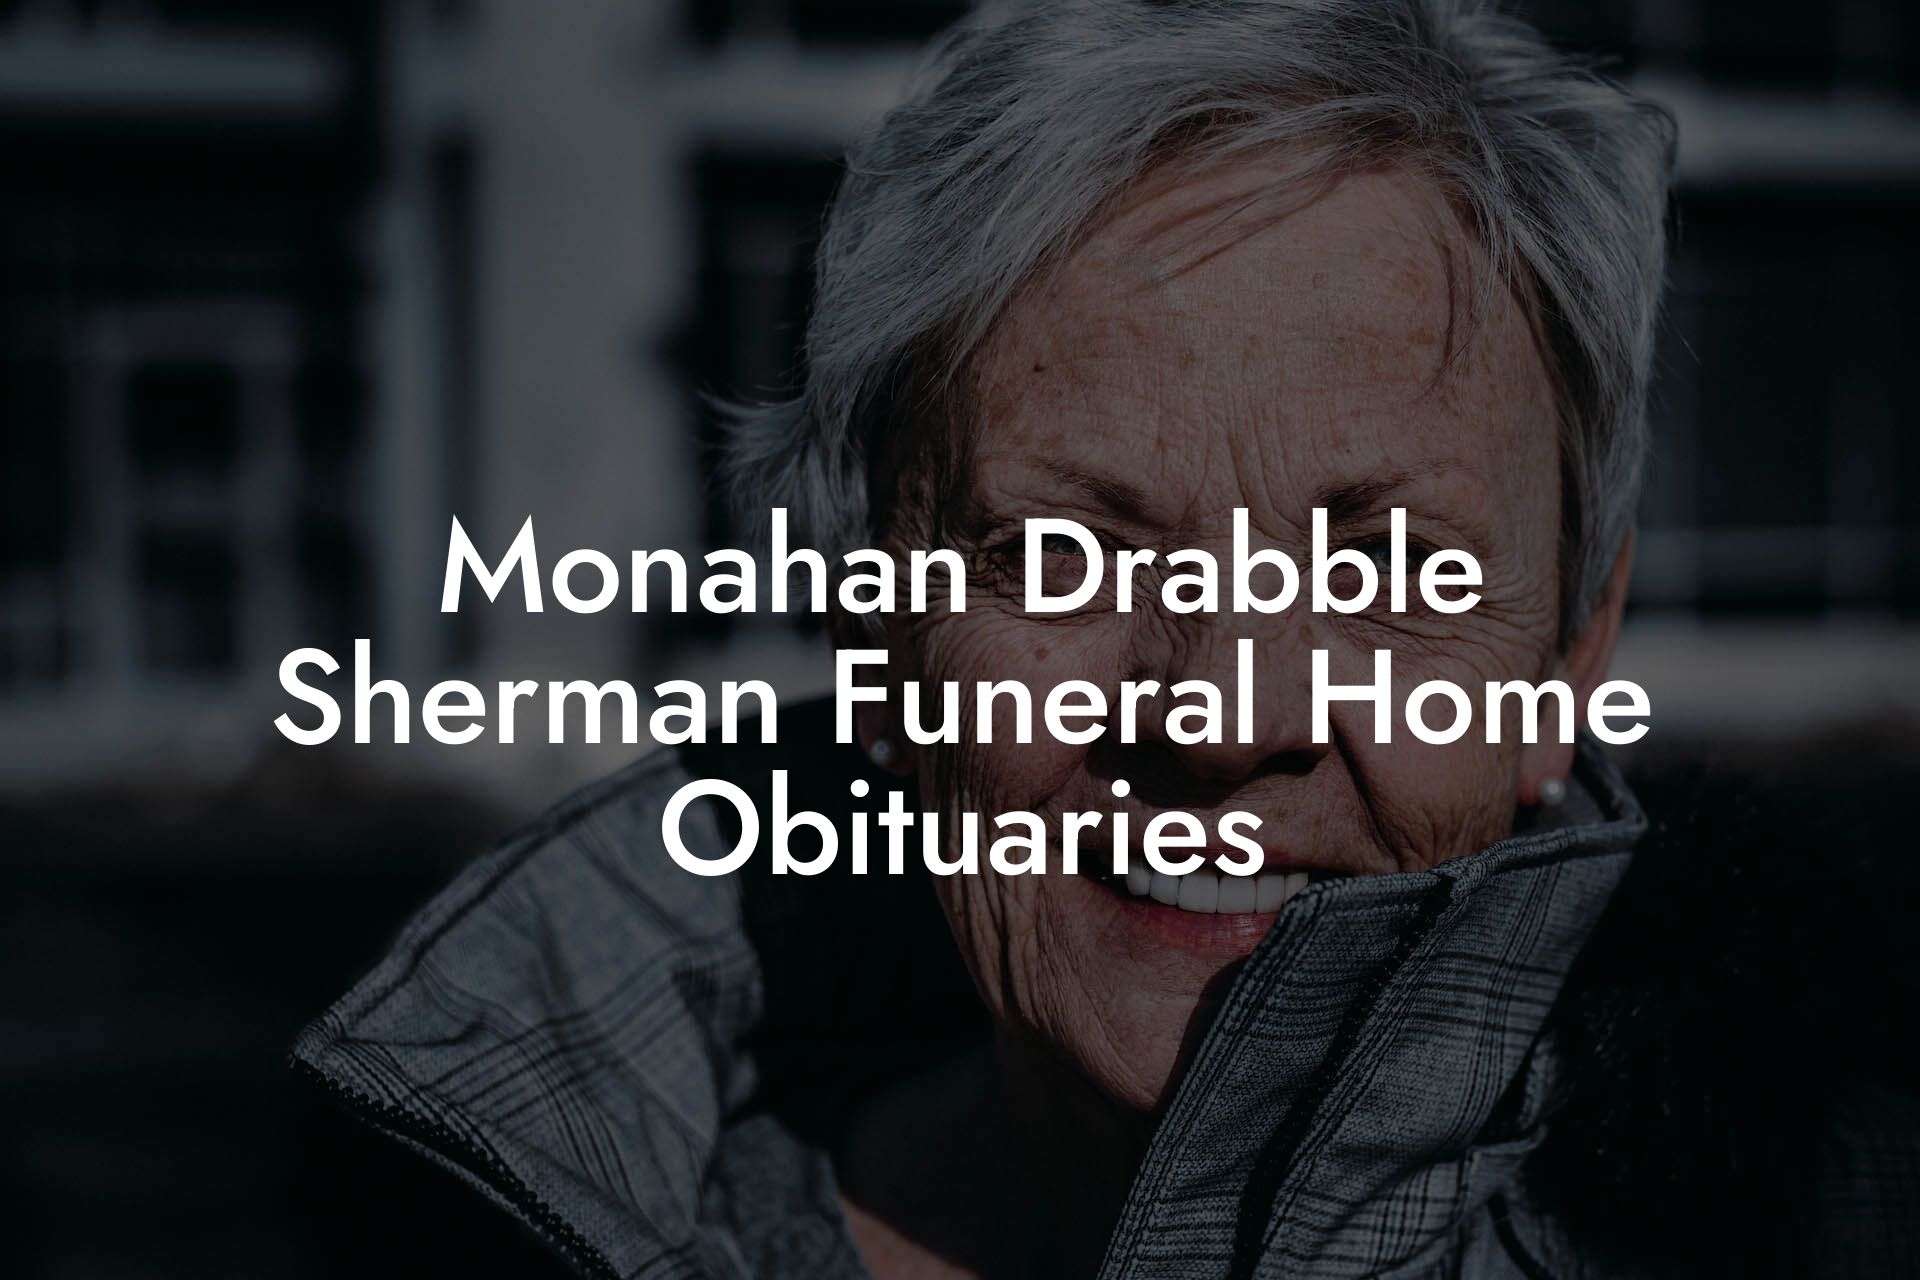 Monahan Drabble Sherman Funeral Home Obituaries